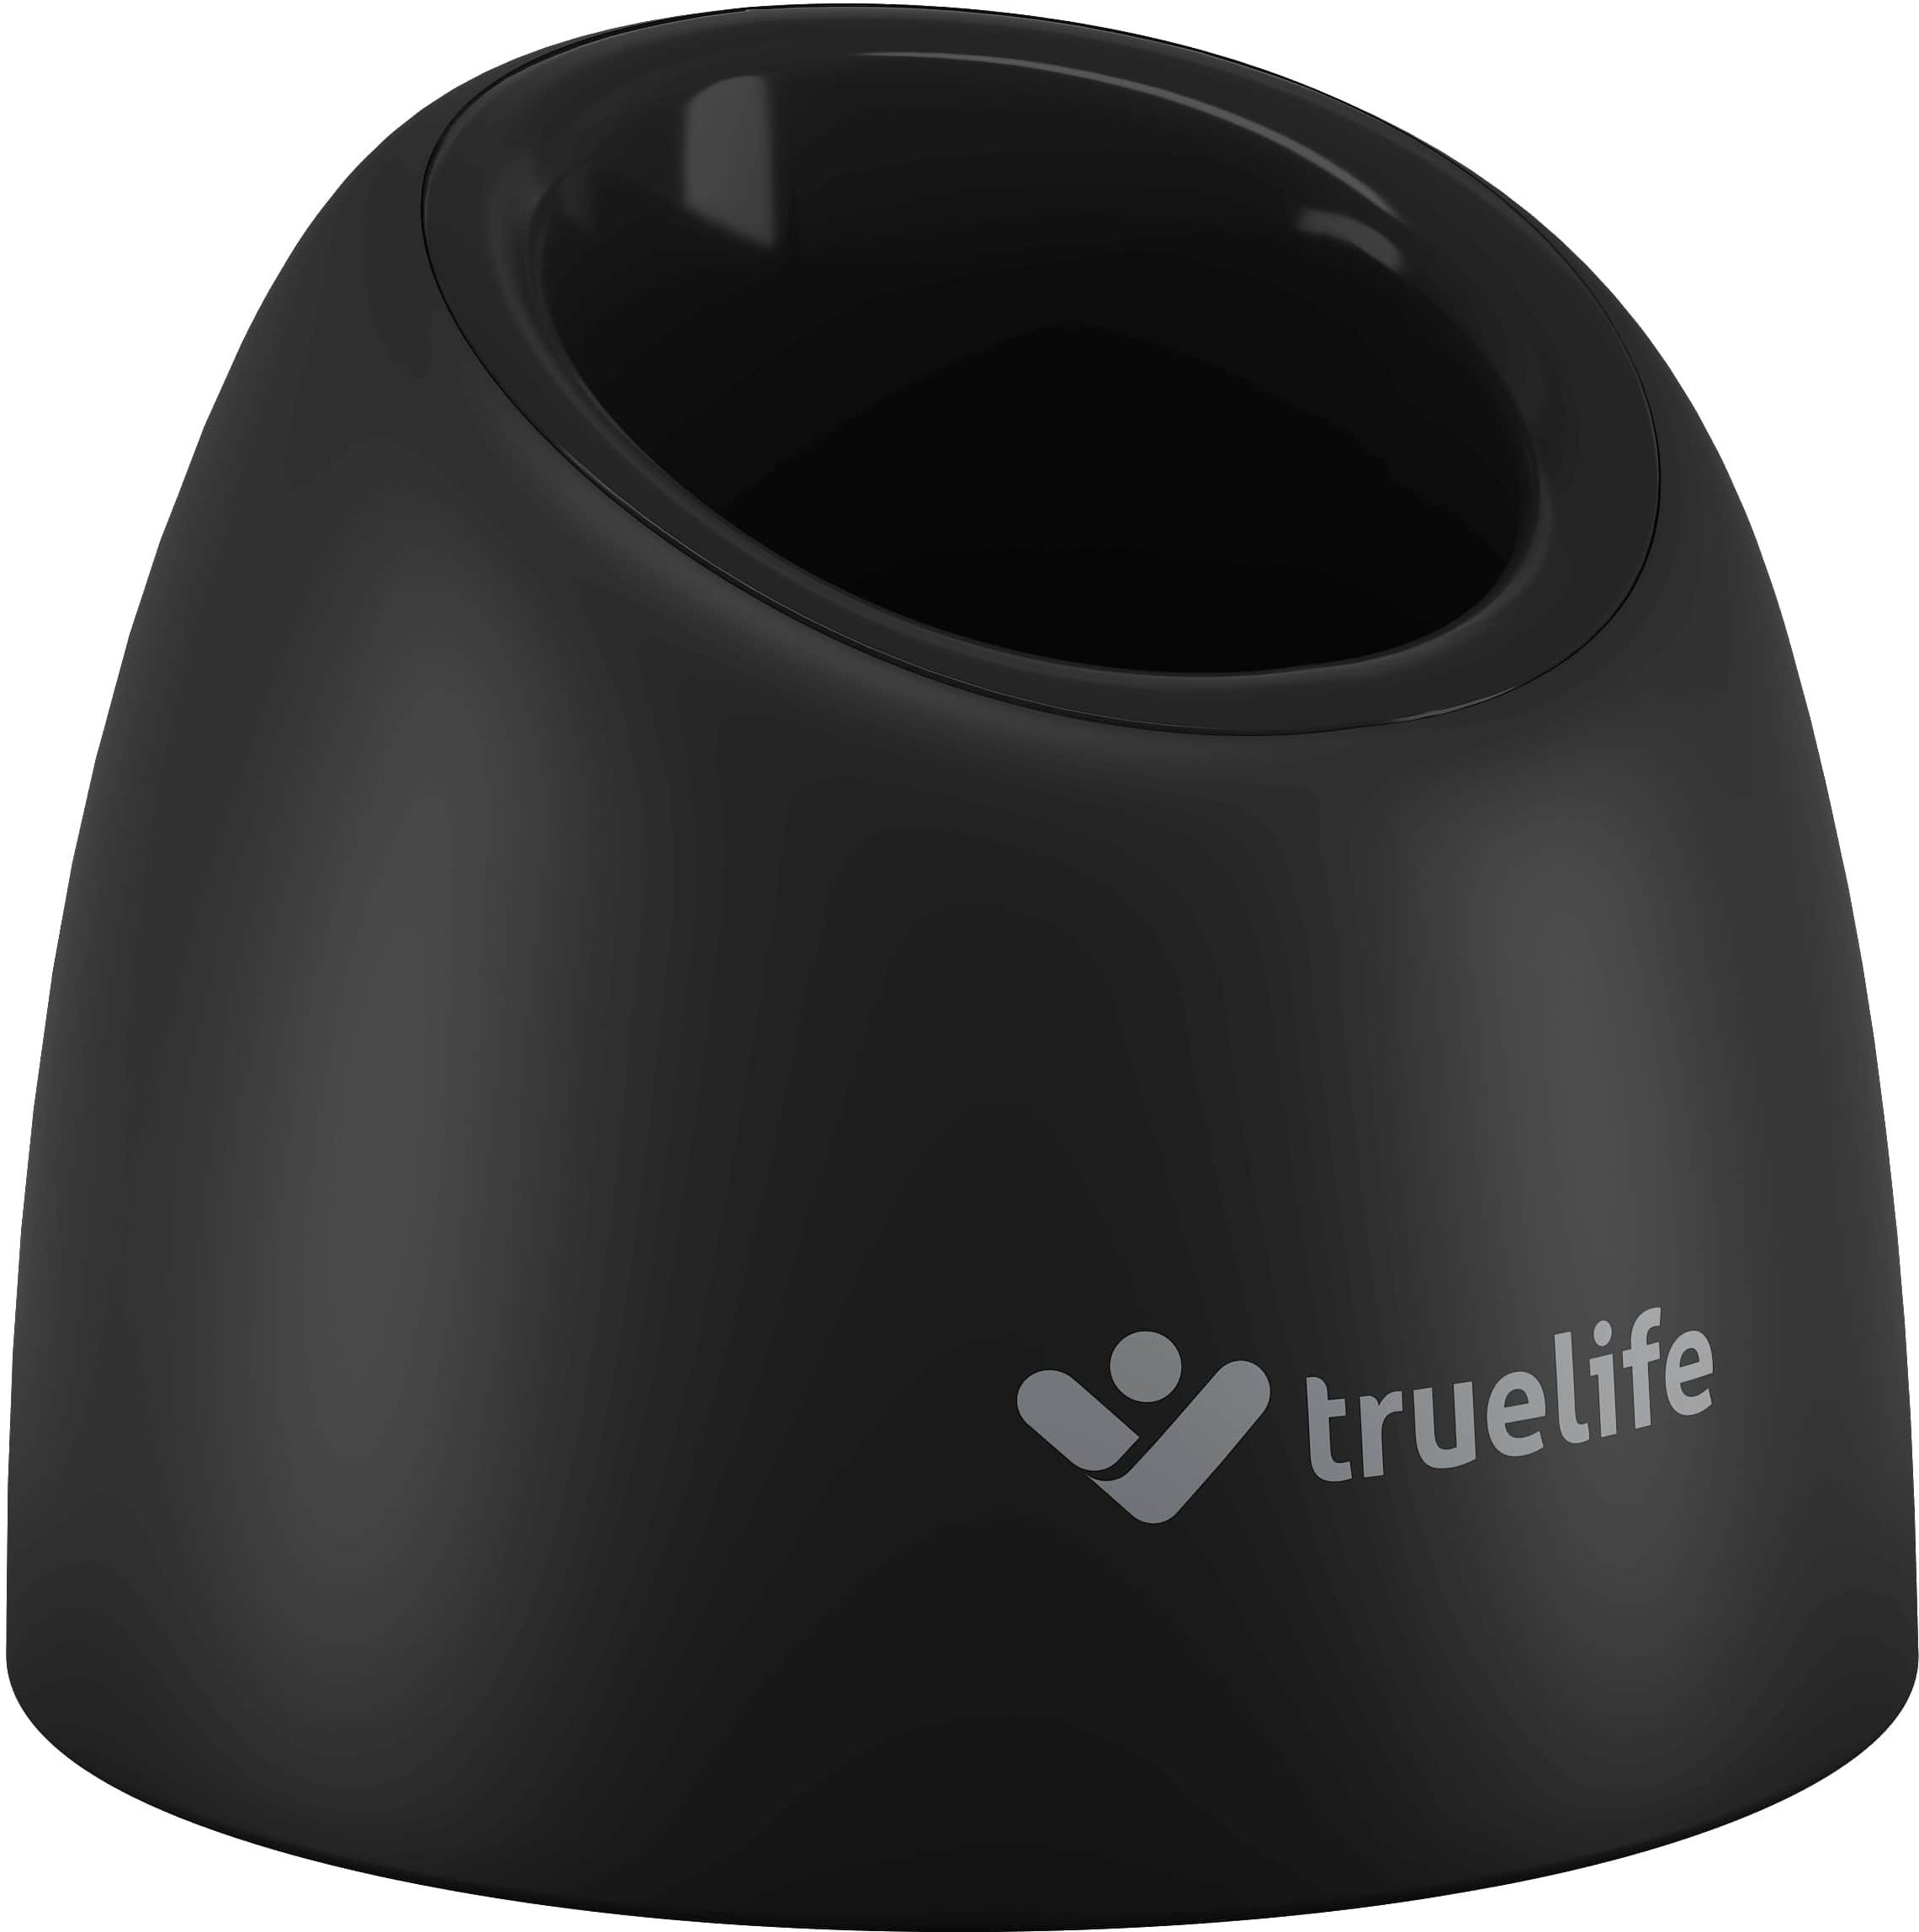 TrueLife SonicBrush kompakt töltőalap fekete